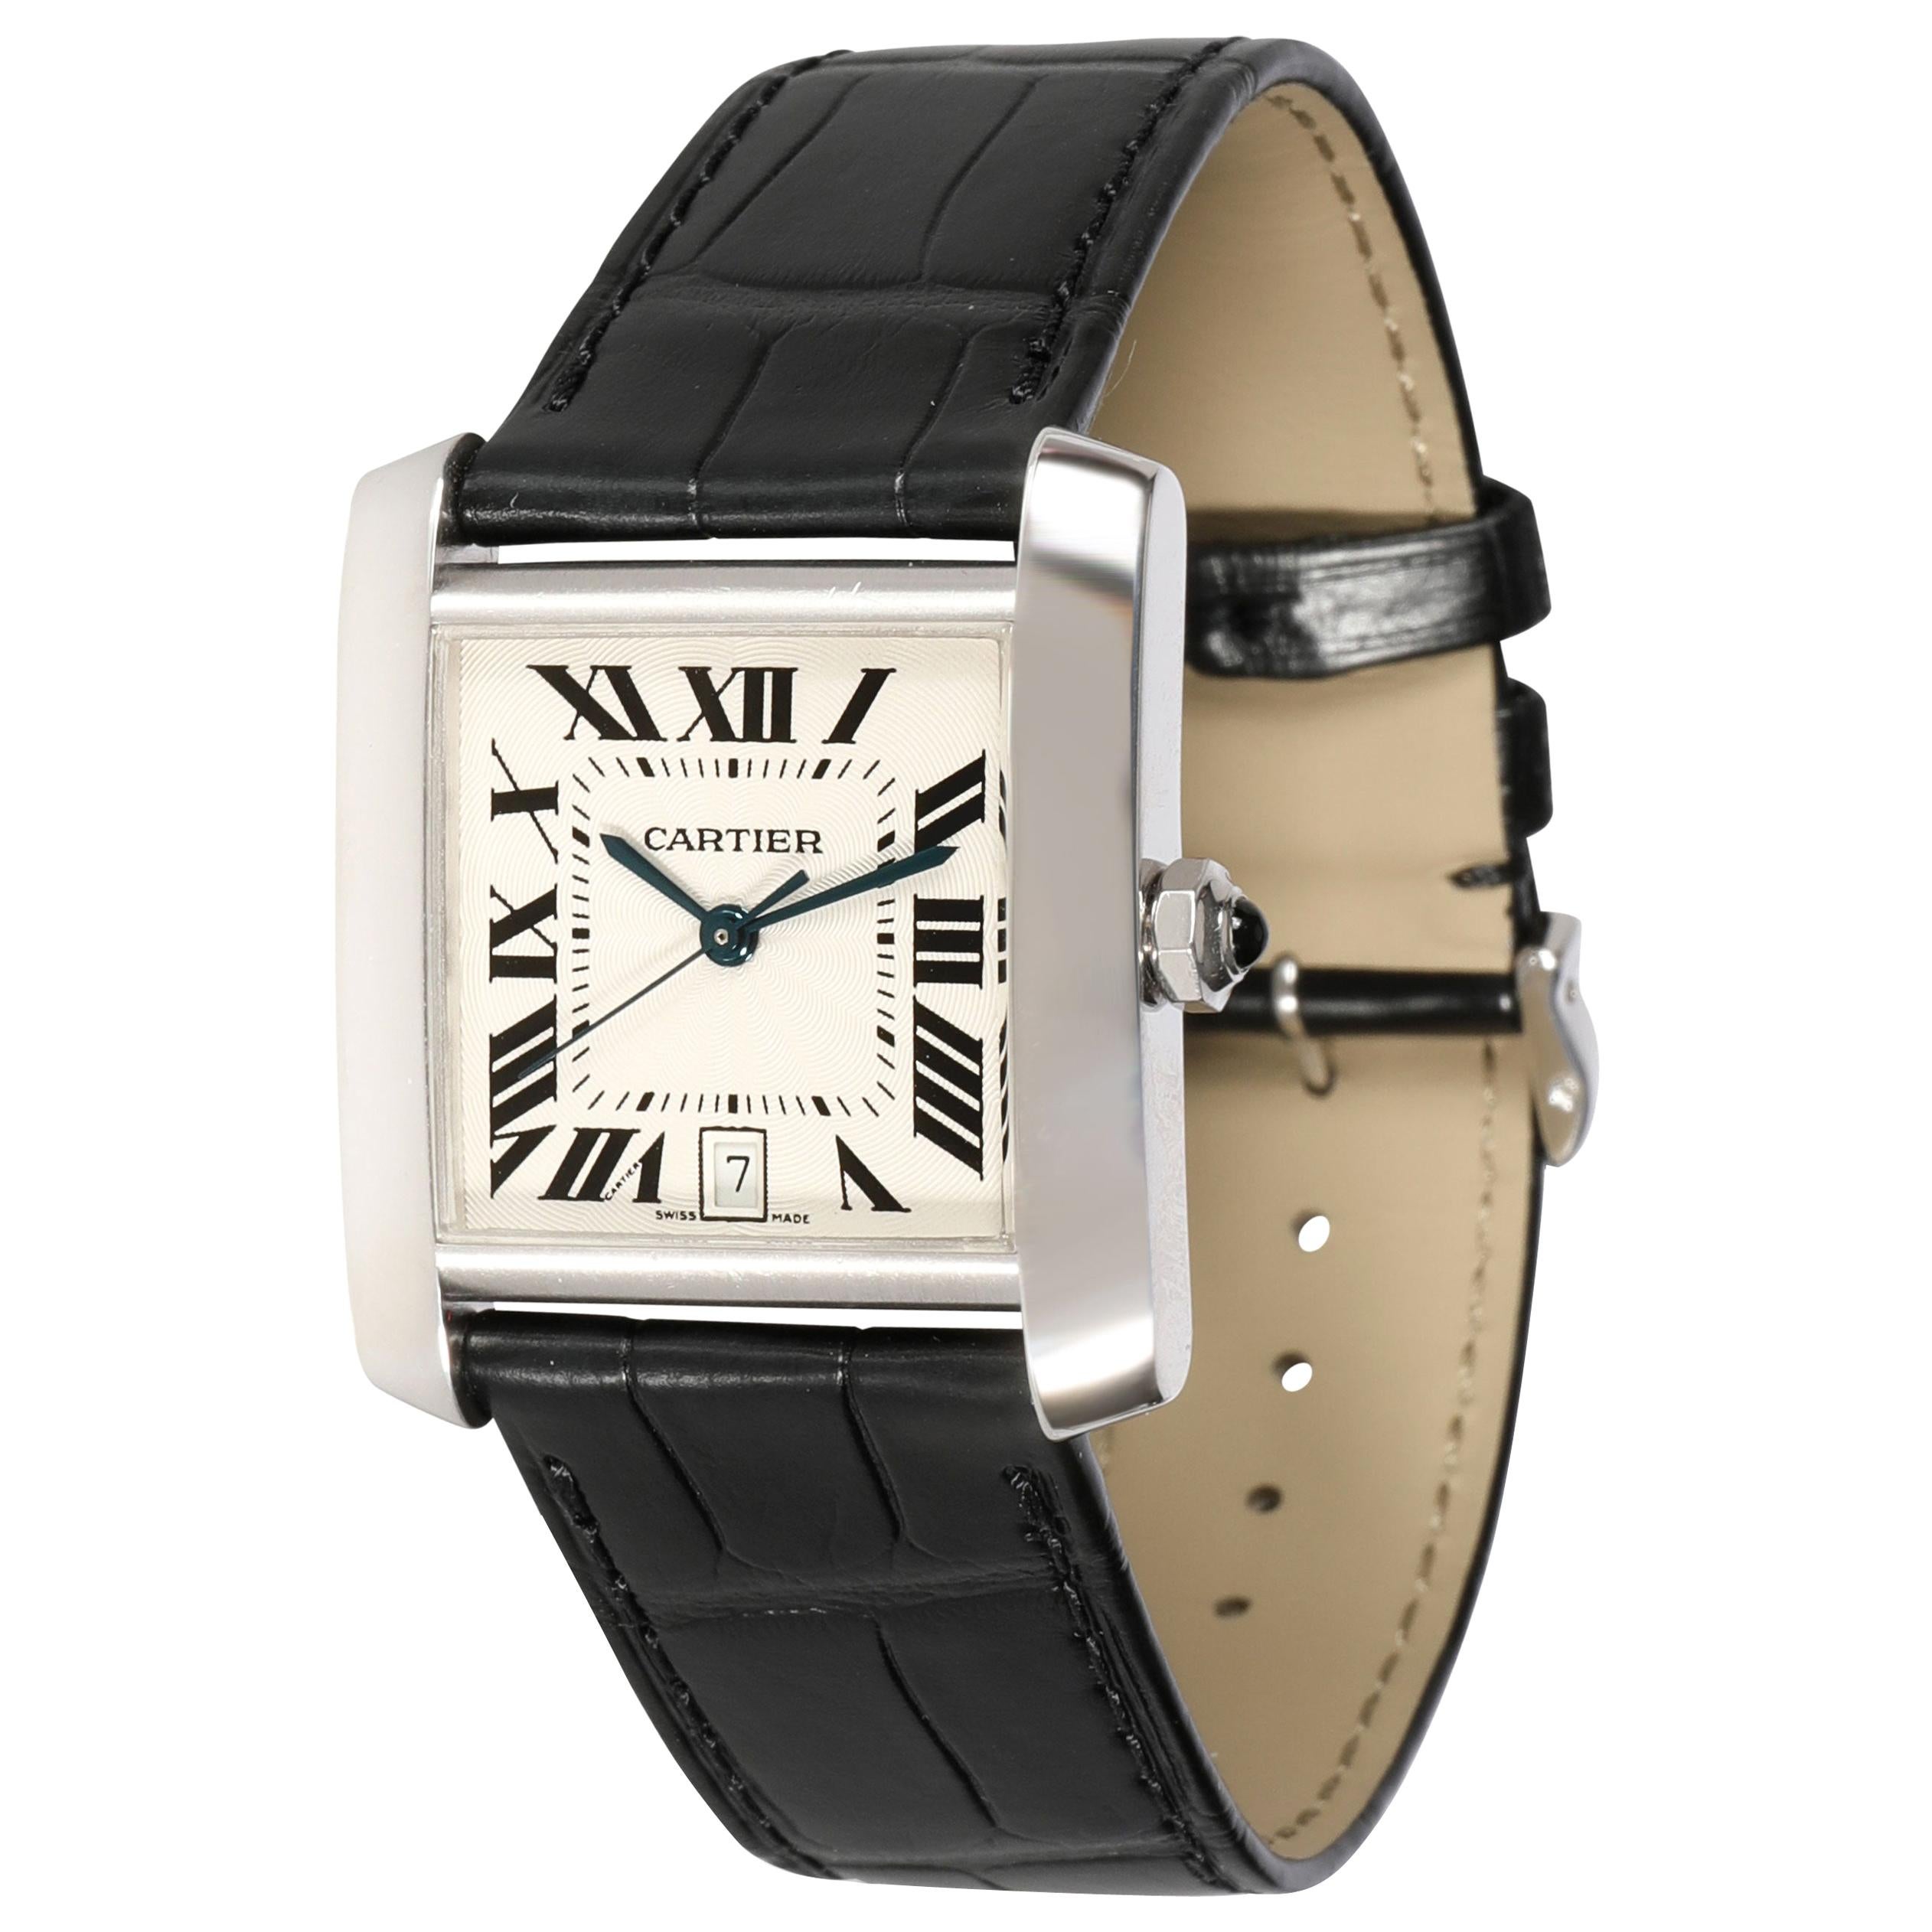 Cartier Tank Francaise W5001156 Unisex Watch in 18 Karat White Gold